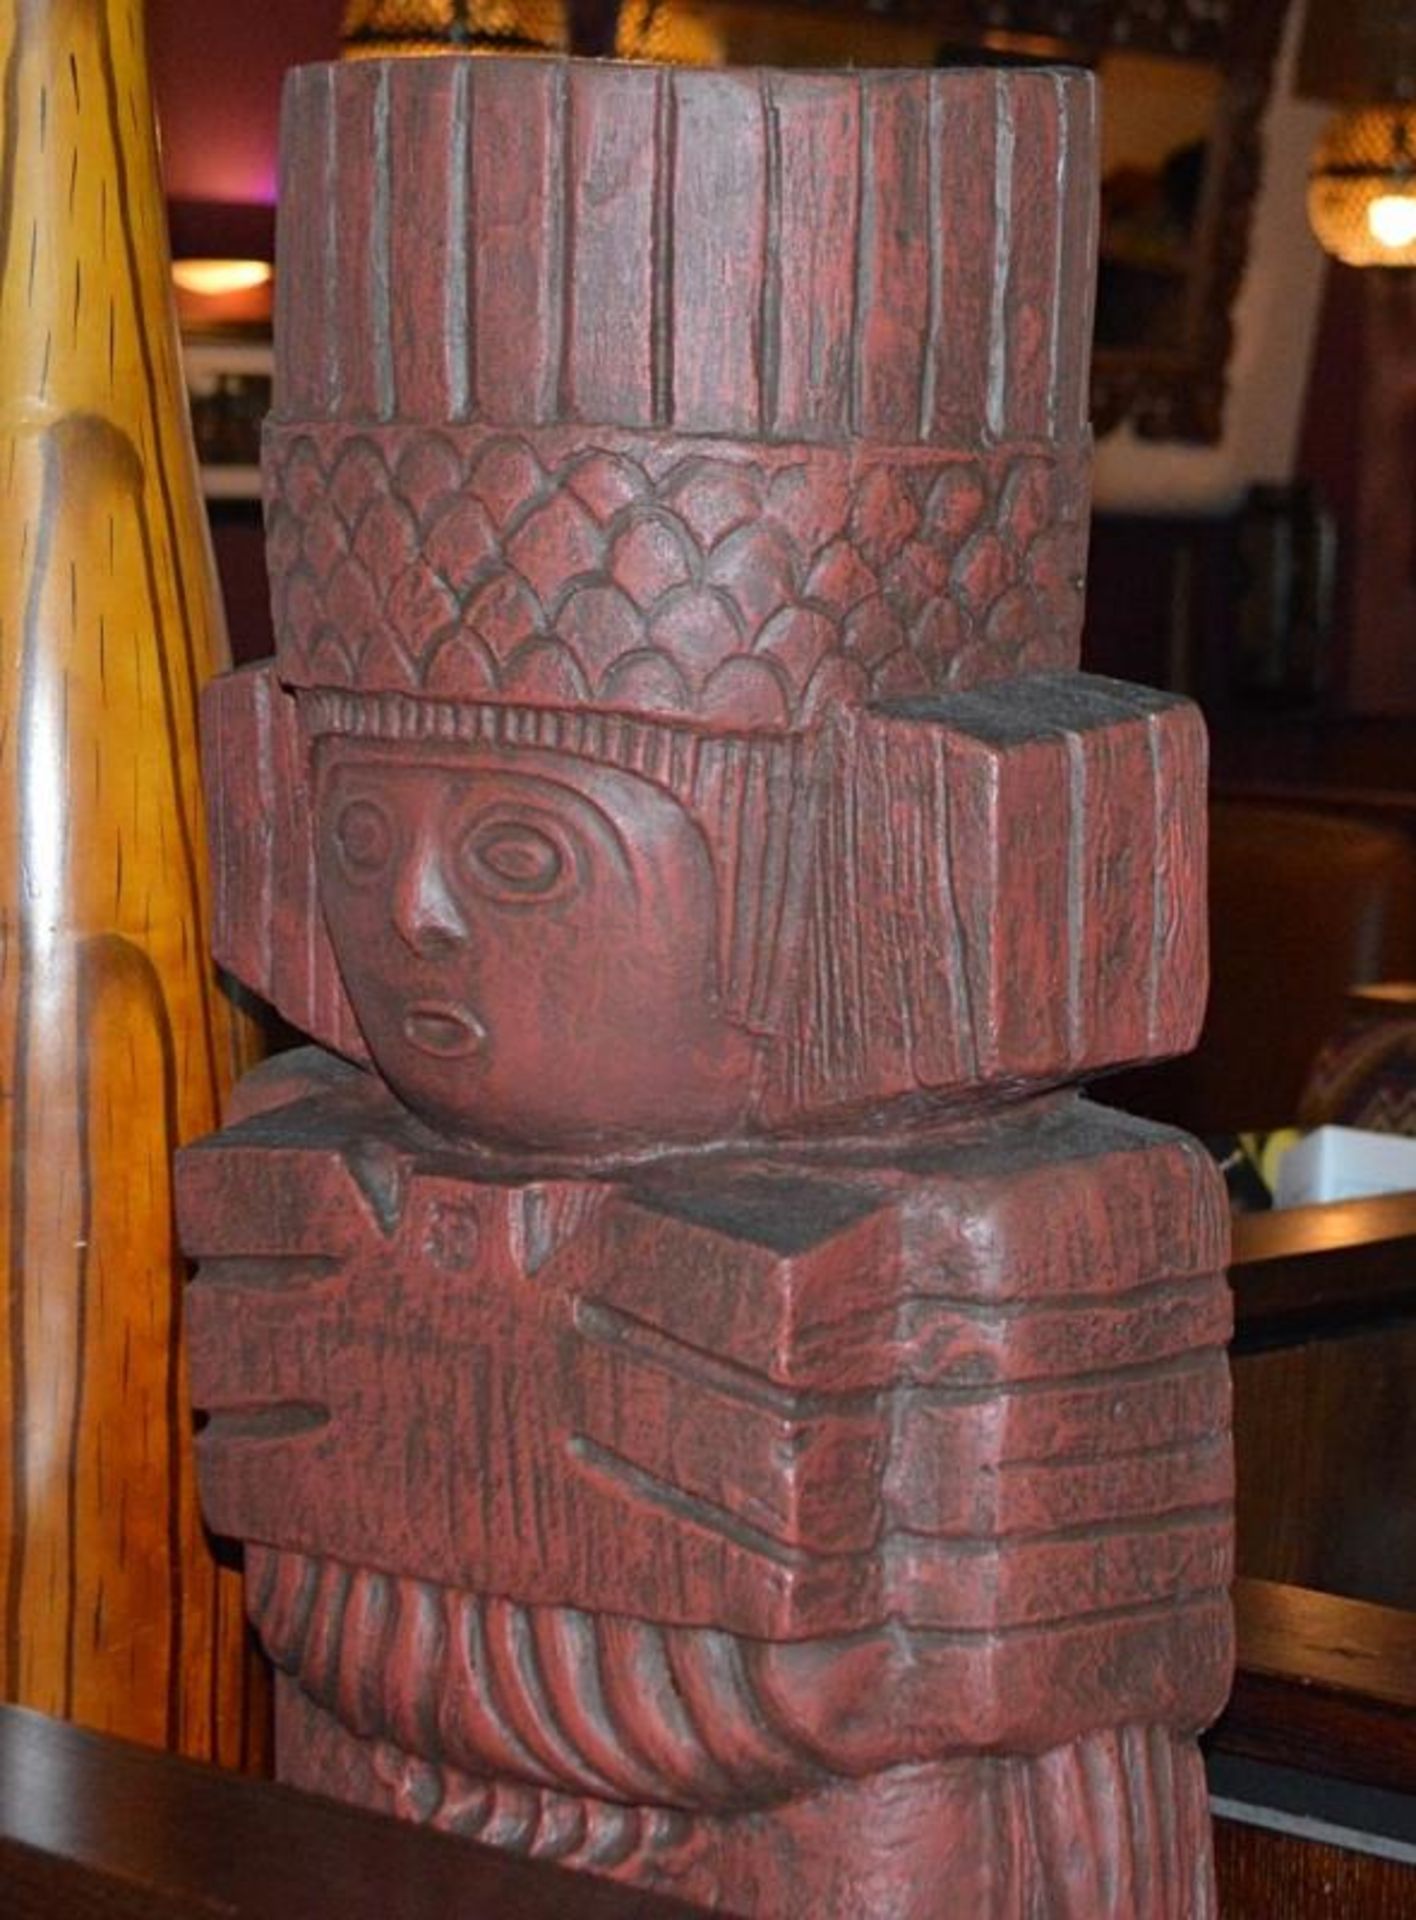 1 x Deceorative Aztec Idol Statue - Dimensions: H74 x W40 x D24cm - CL367 - Ref CQ-FB - Location: